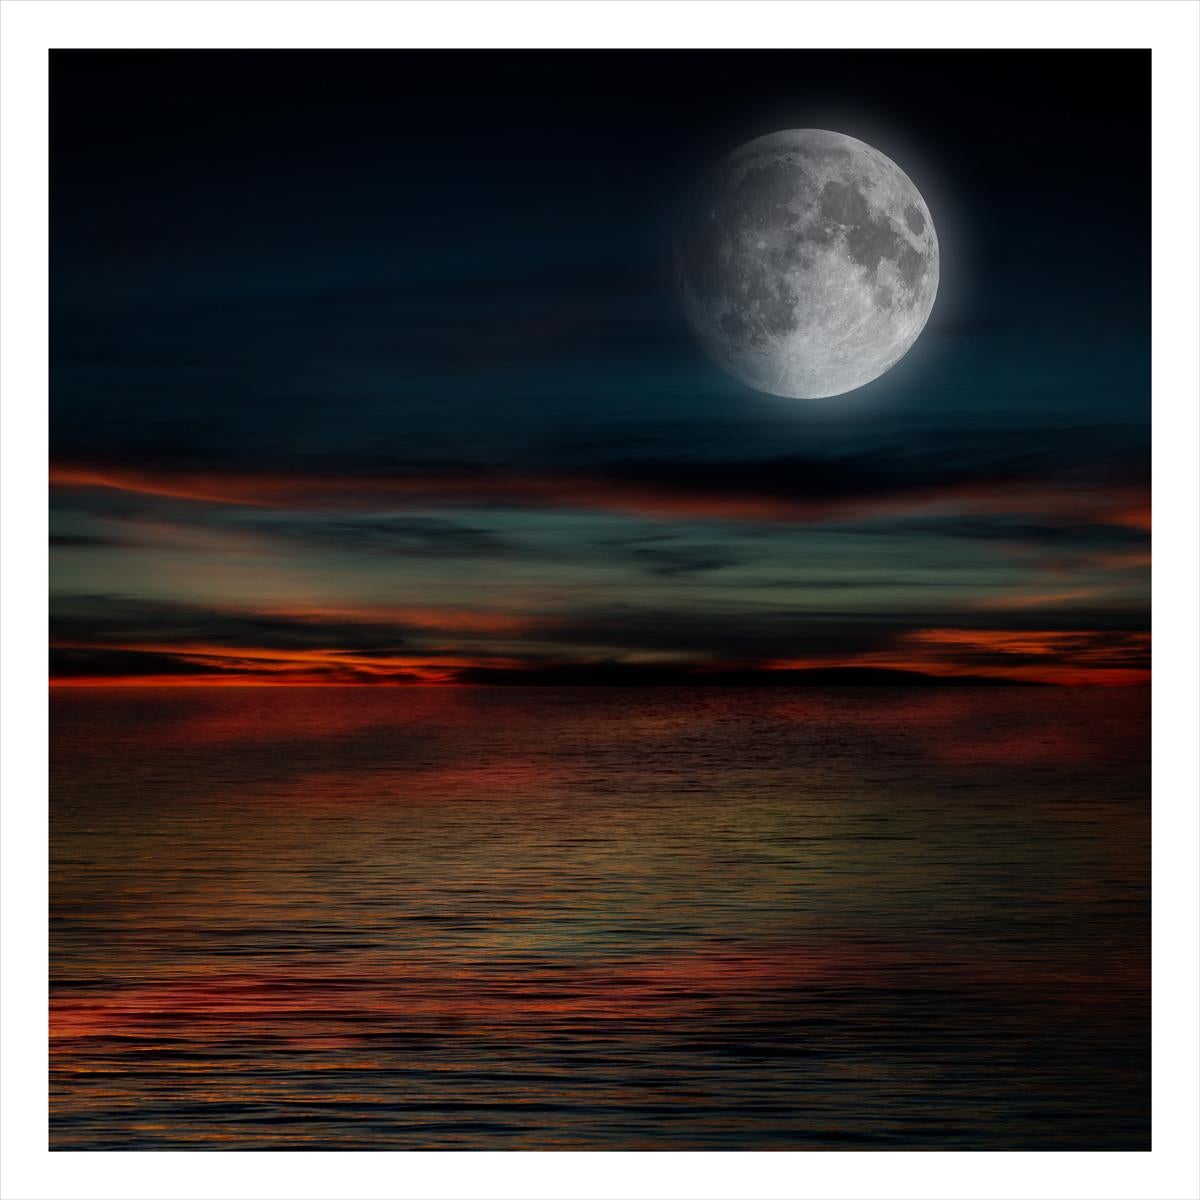 Moon #13 - Photograph by Bob Tabor